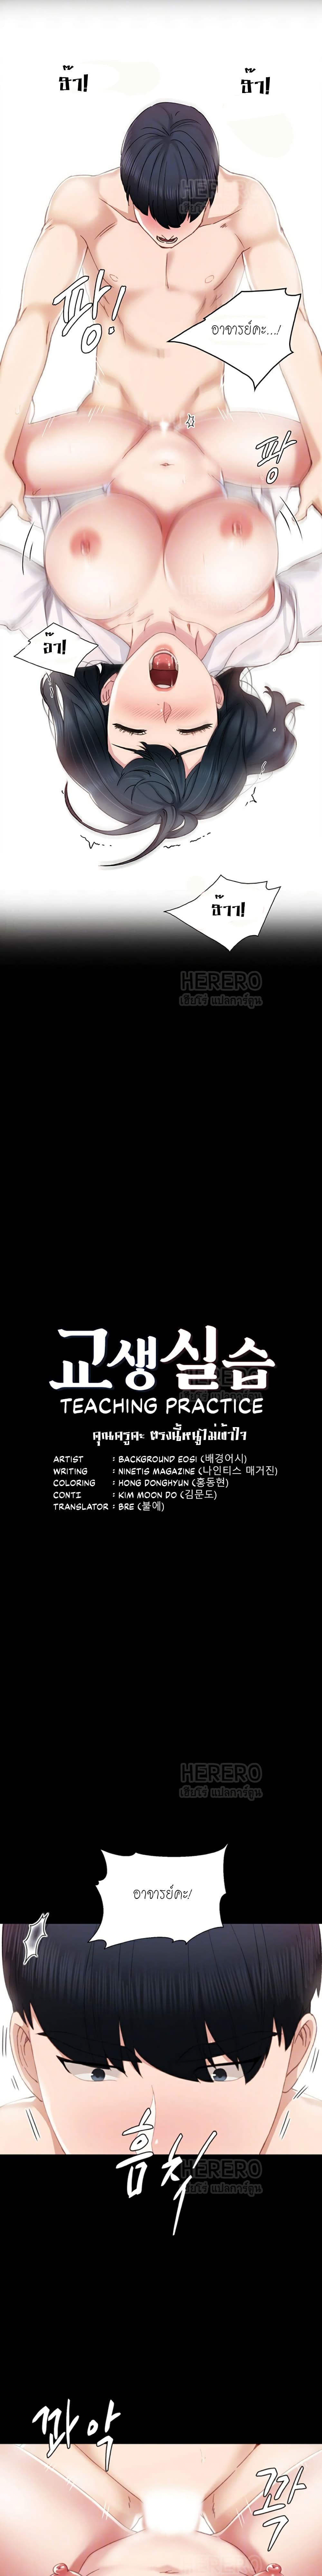 Teaching Practice 11-11